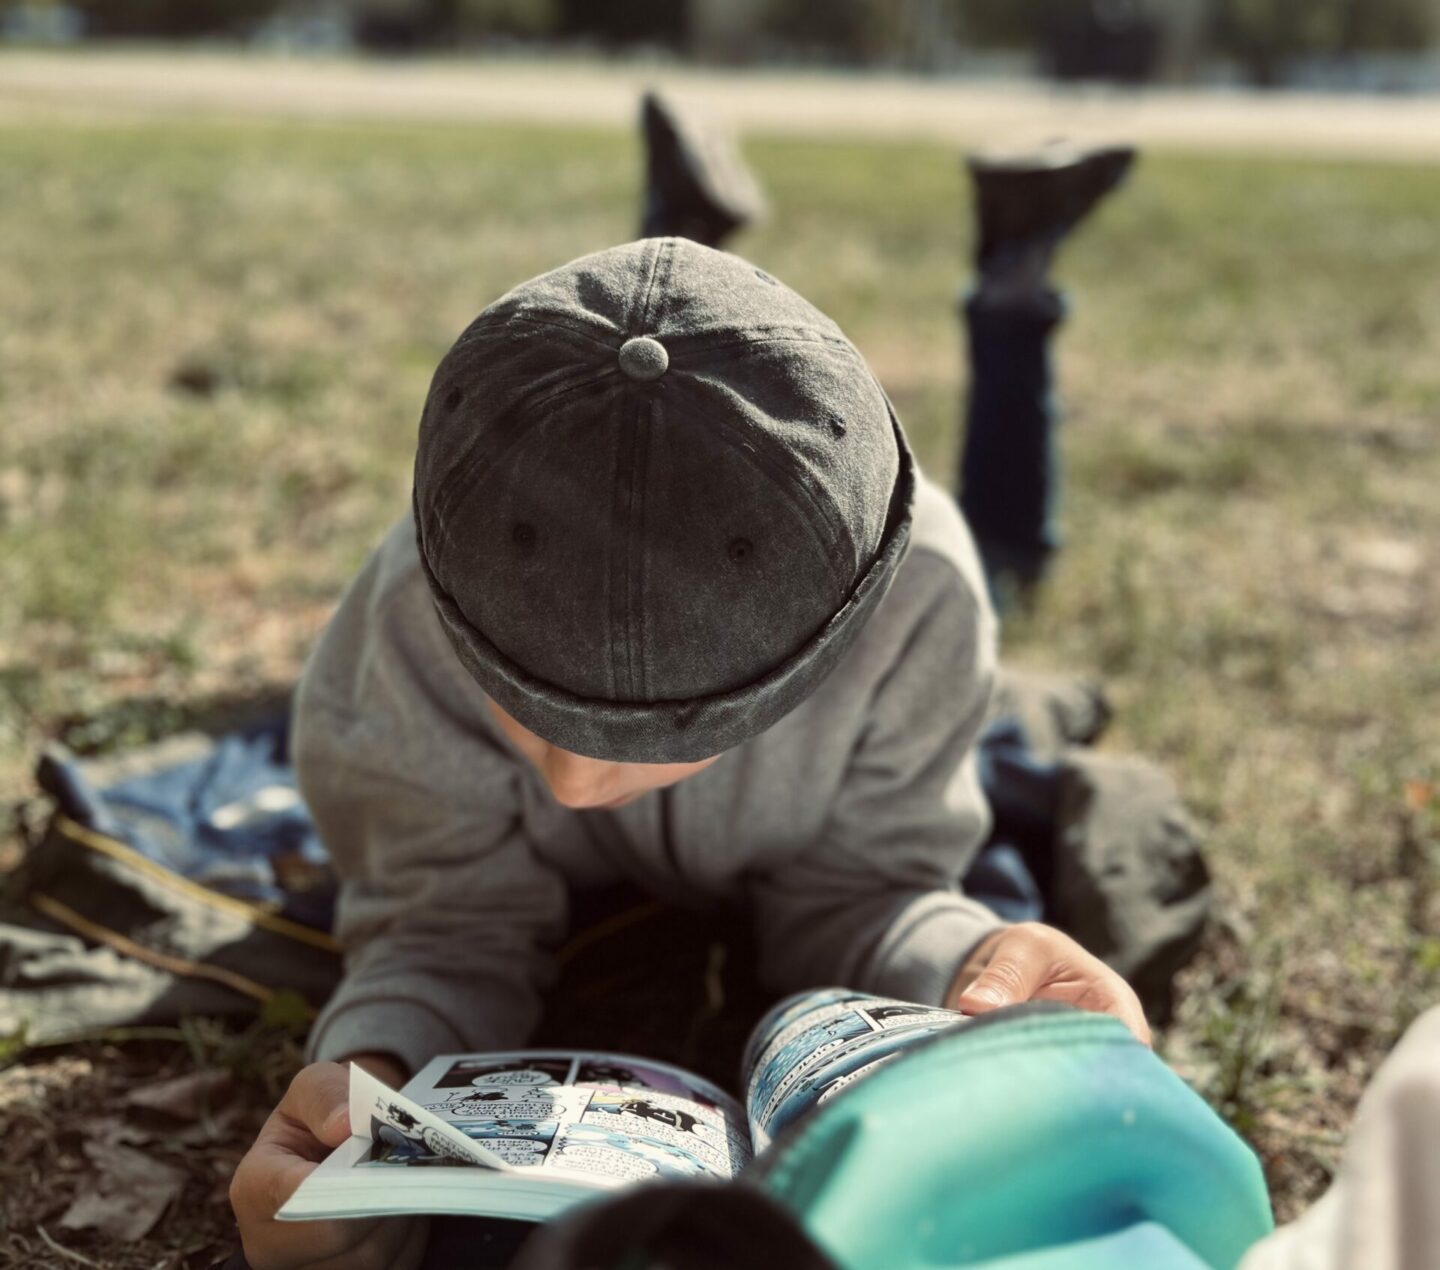 Boy reading a book. Does education help entrepreneurs?